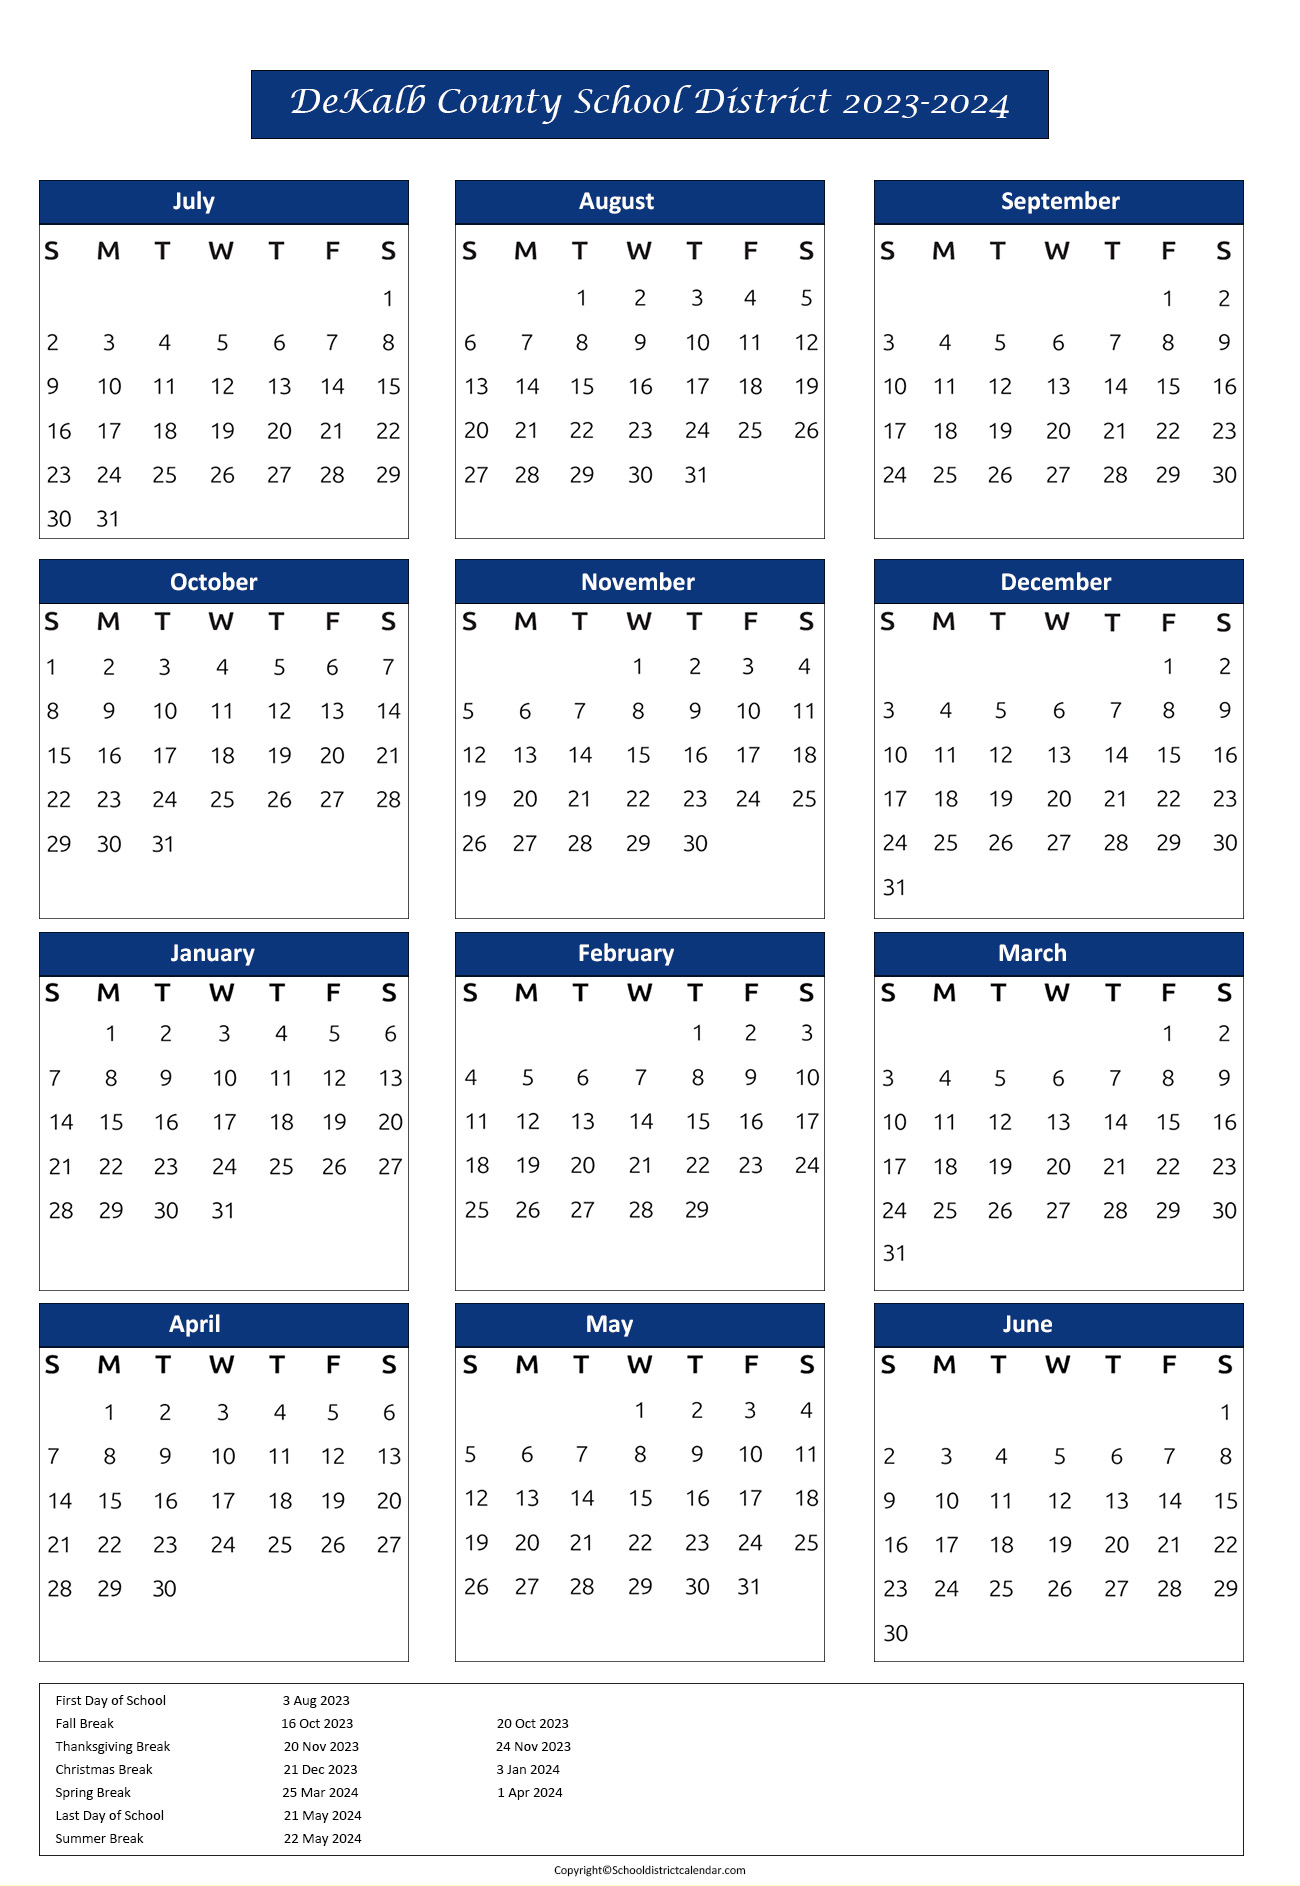 DeKalb County School District Calendar Holidays 20232024